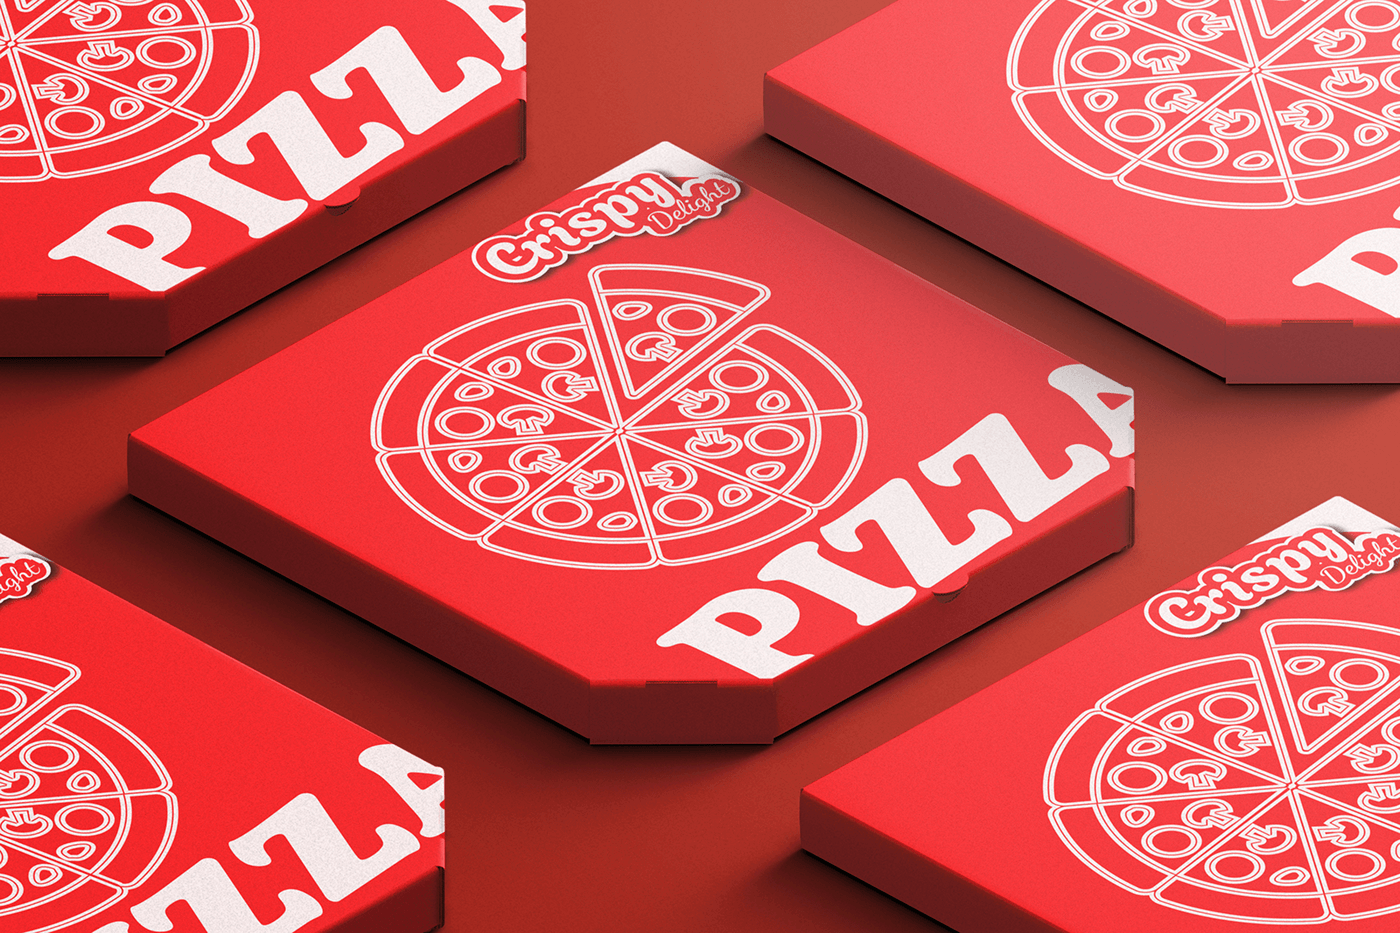 crispy delight pizza box packaging